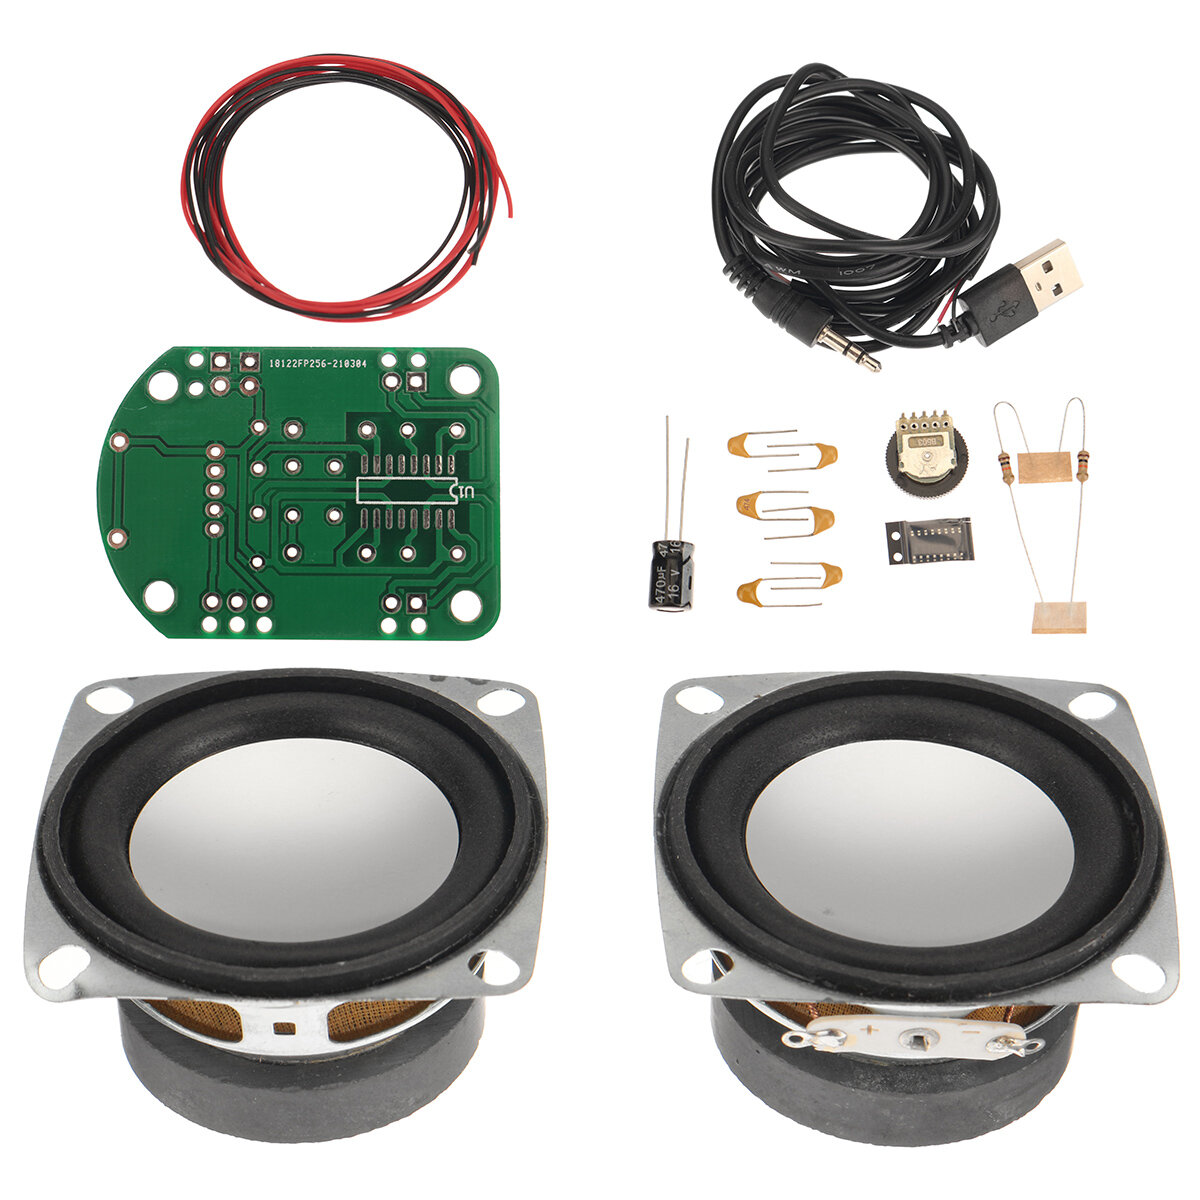 

EQKIT 3W Power Amplifier Kit Amplifier Production DIY kit Small Speaker Parts Electronic Production Kit